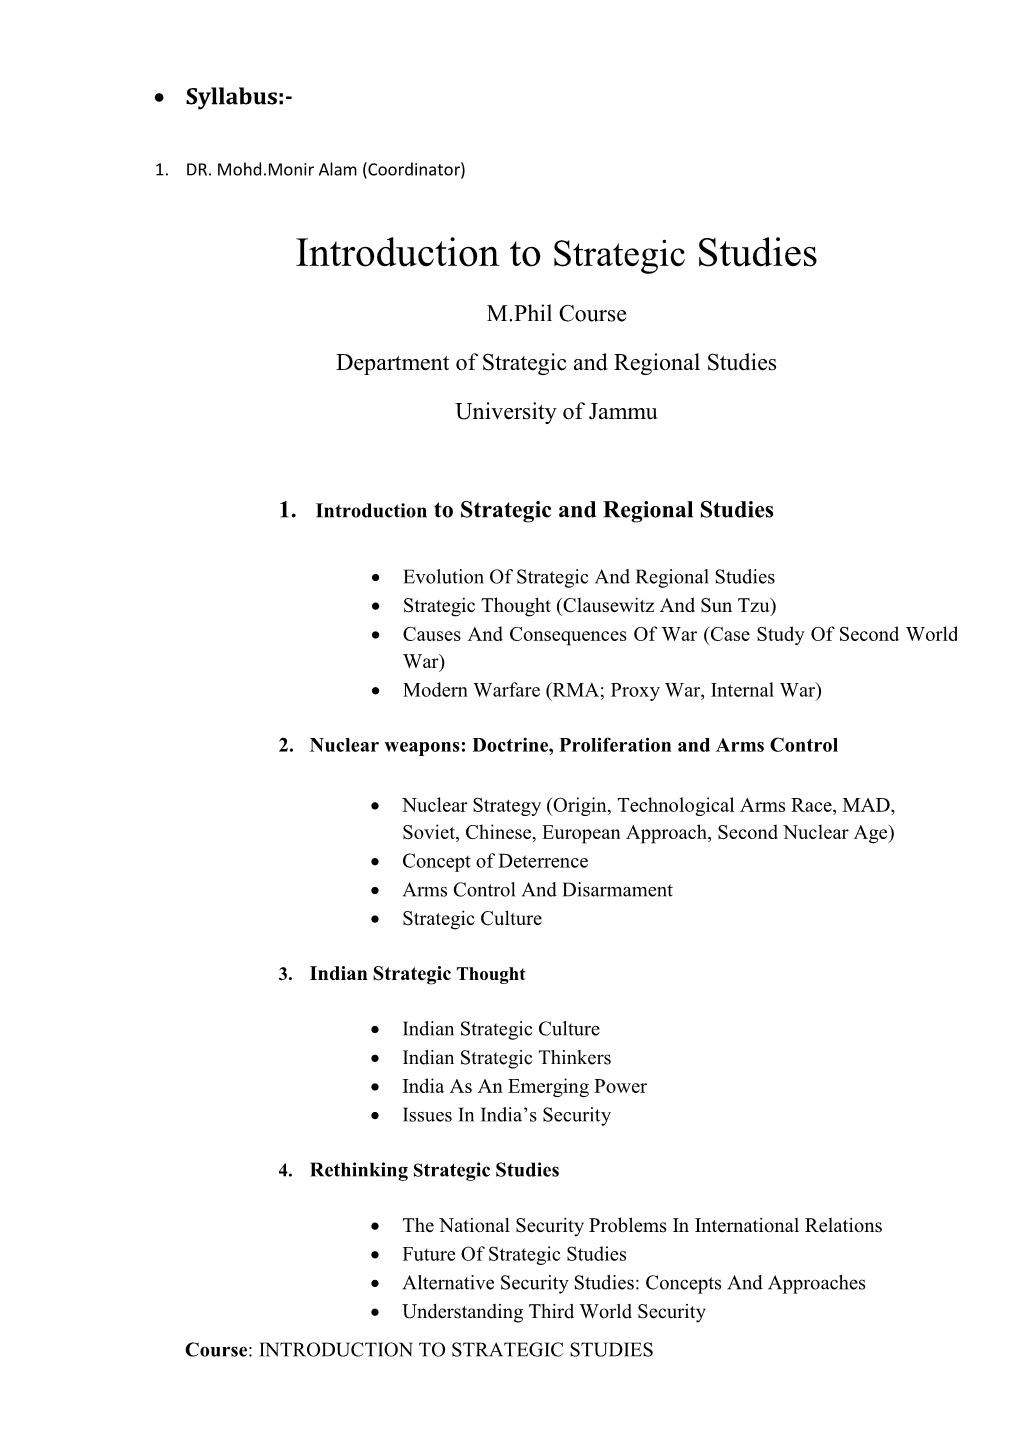 Syllabus of Strategic and Regional Studies